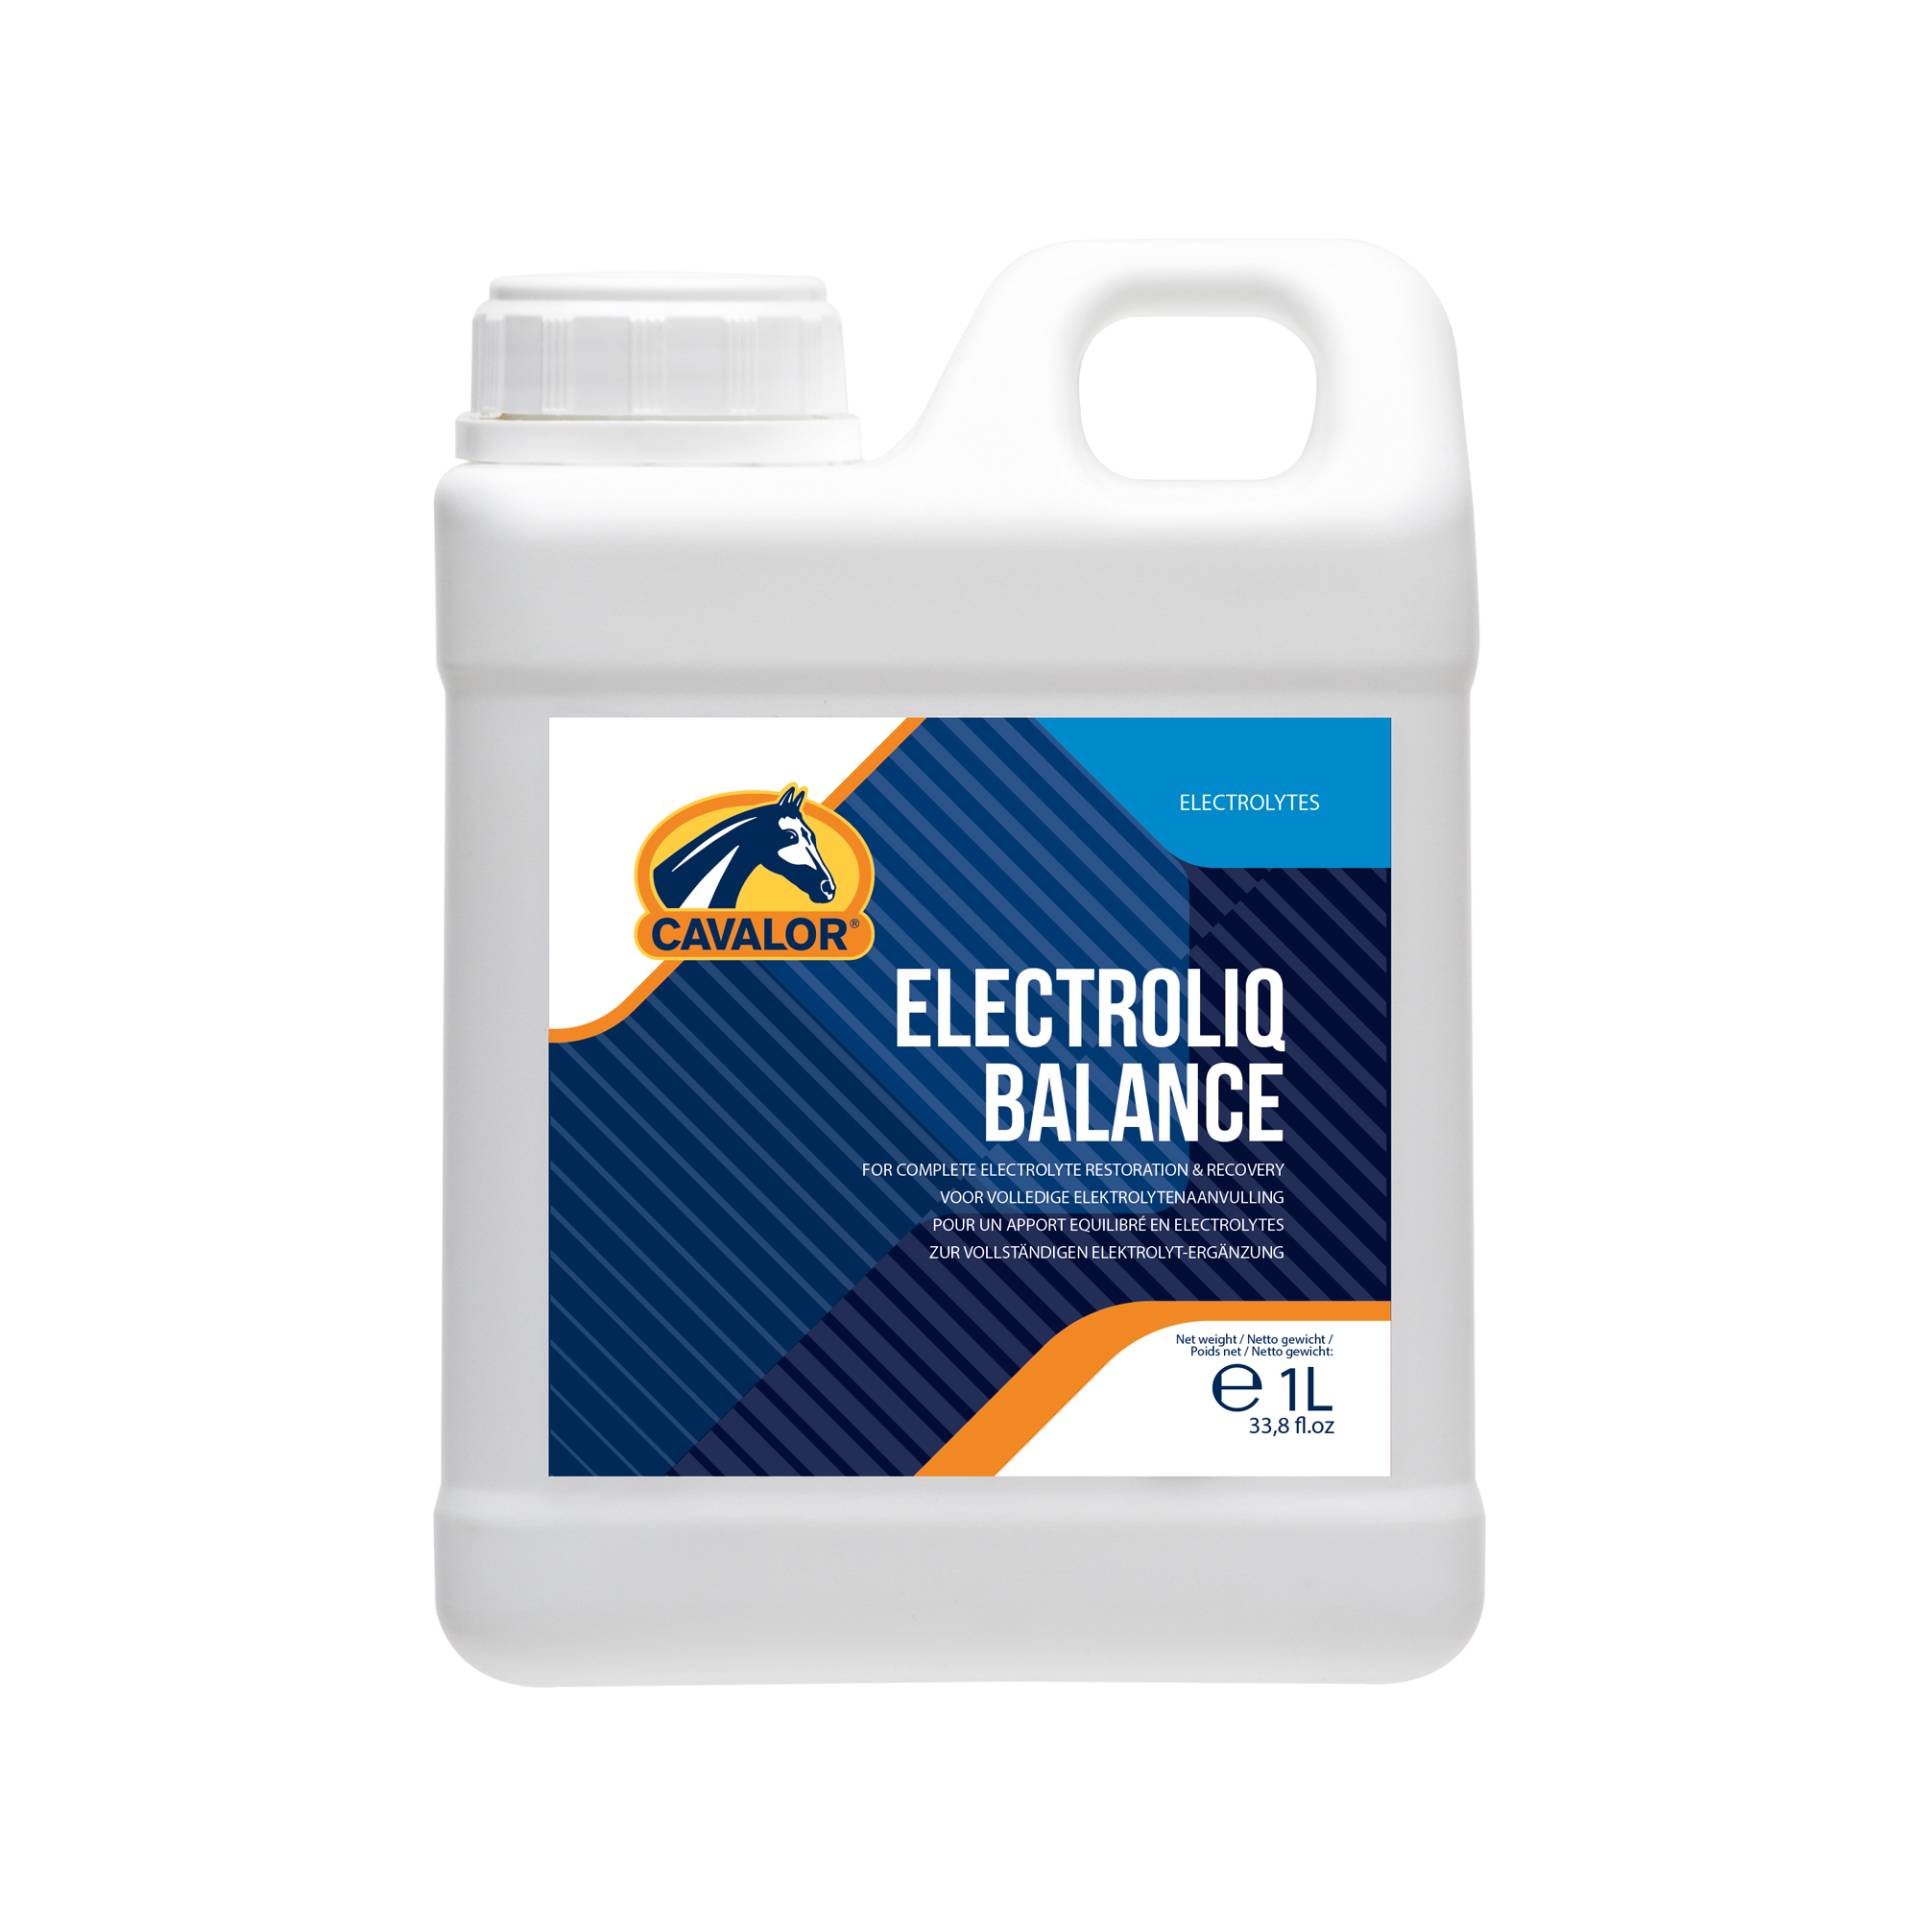 Cavalor Electroliq Balance - 5 Liter von Cavalor